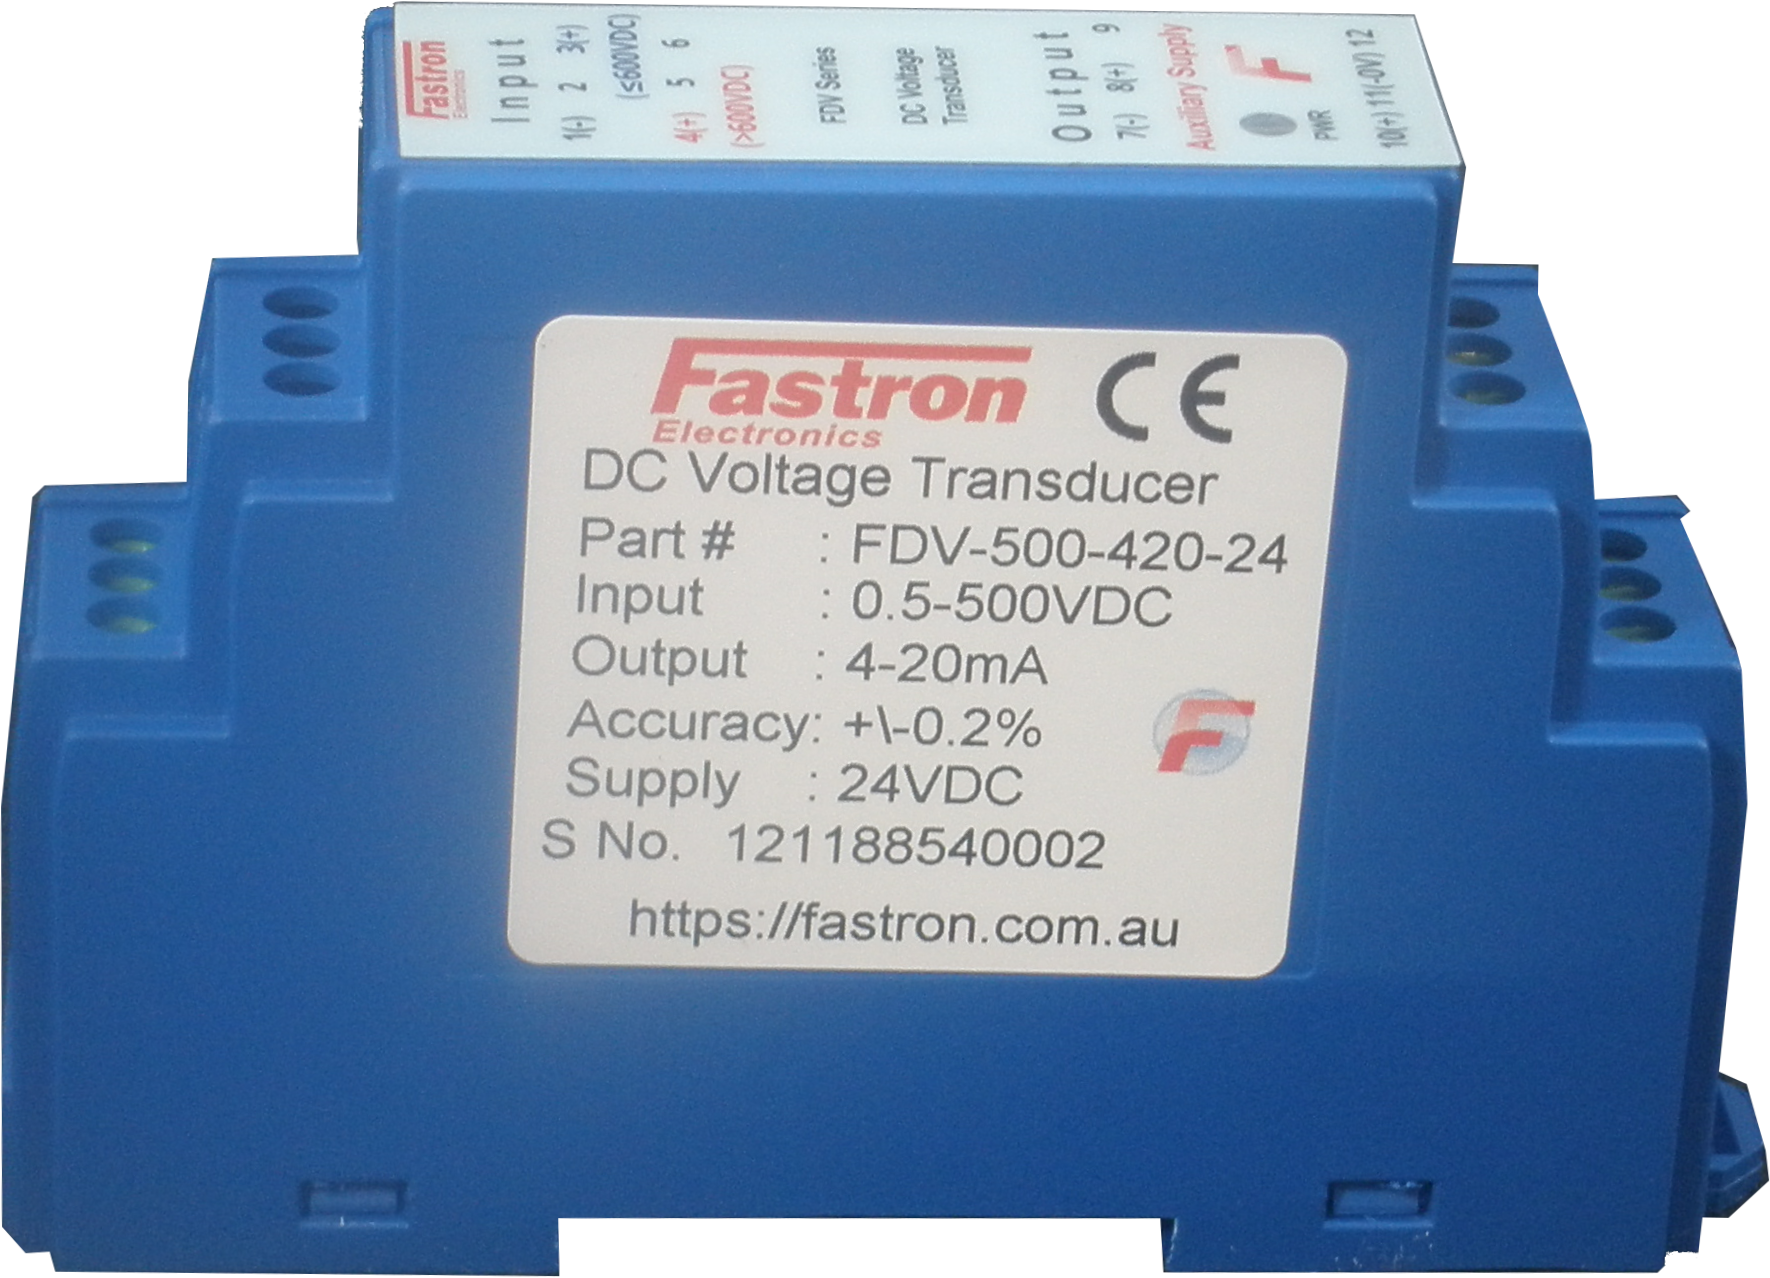 FDV-150-V05-24, DC Voltage Transducer, Din Rail Mount, 0-150VDC, 5V output, 24VDC Supply Voltage, 150mS Response